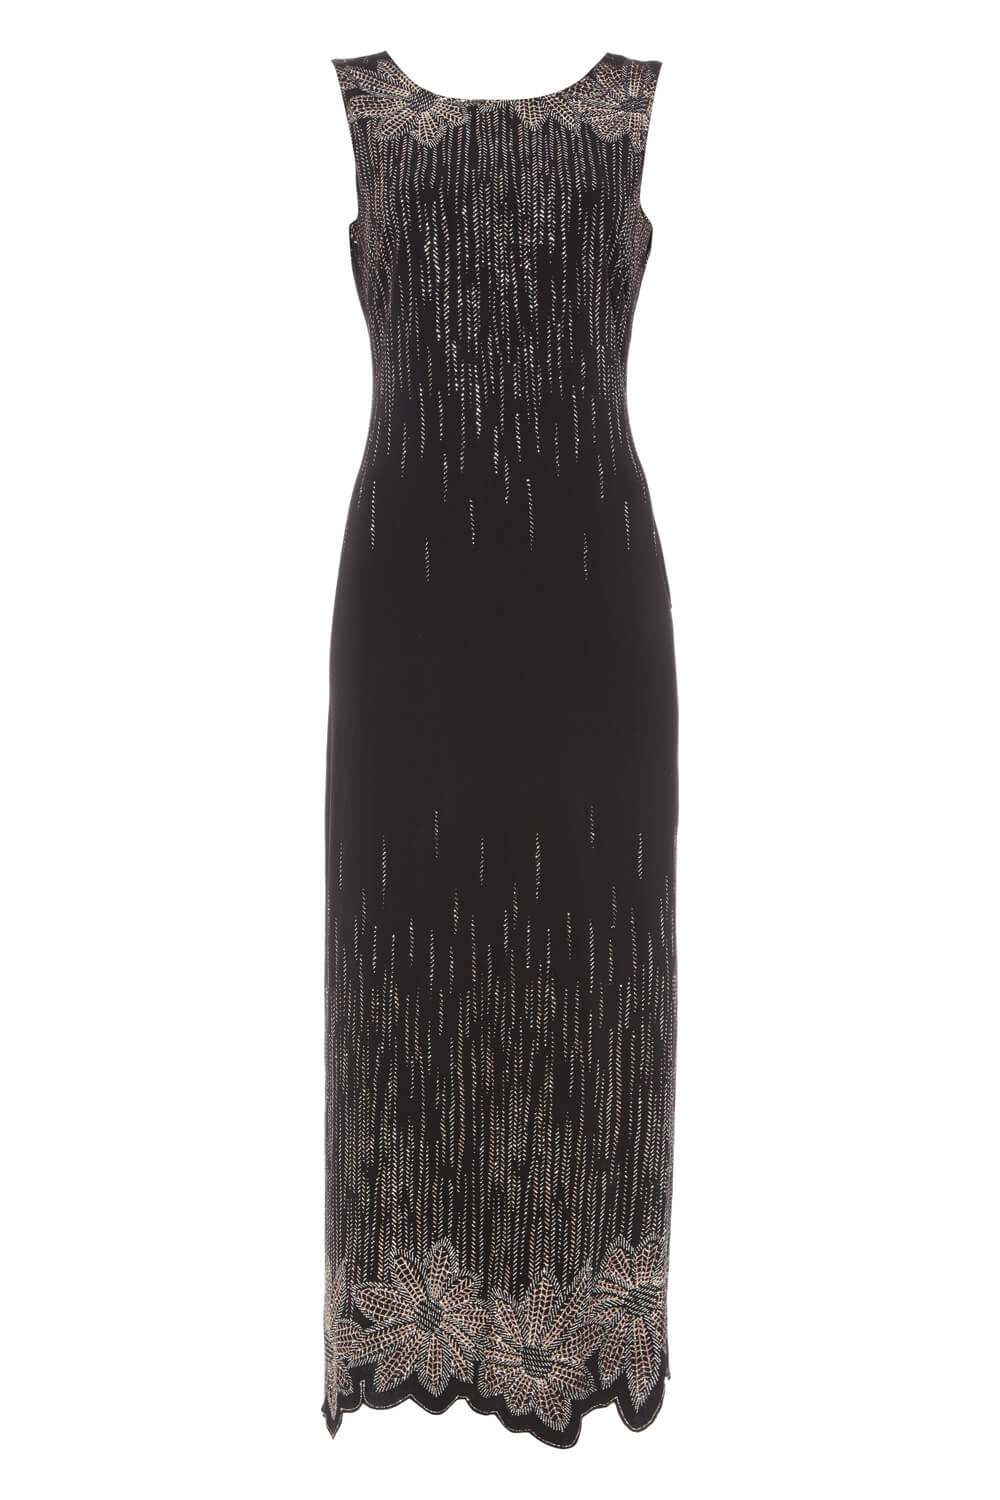 Black Glitter Floral Evening Maxi Dress, Image 5 of 5